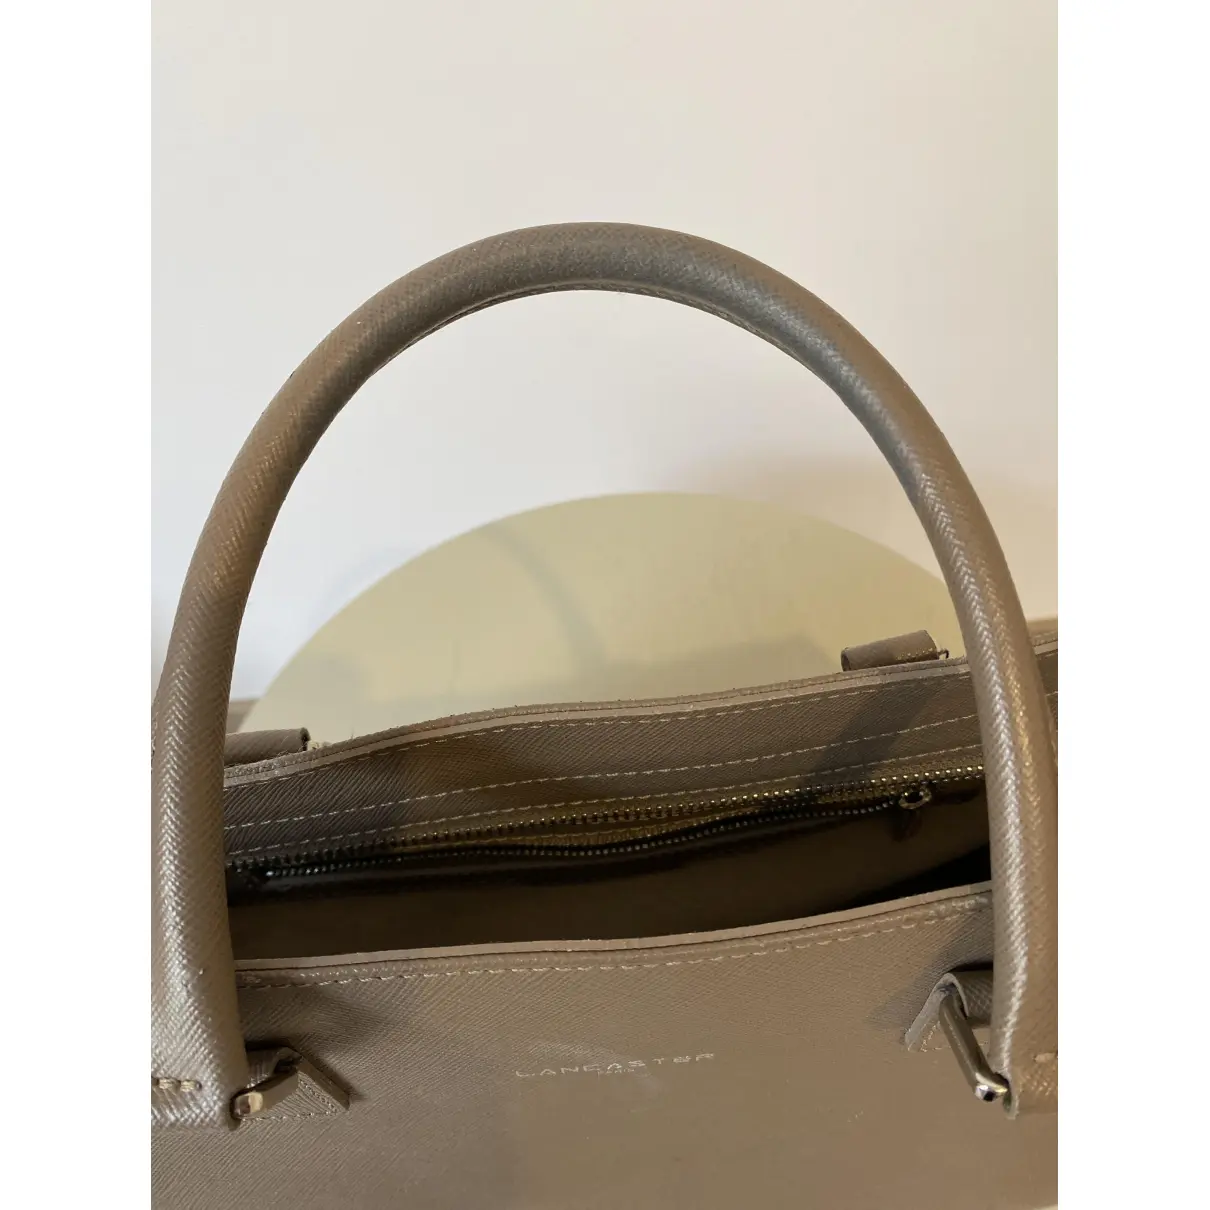 Leather handbag Lancaster